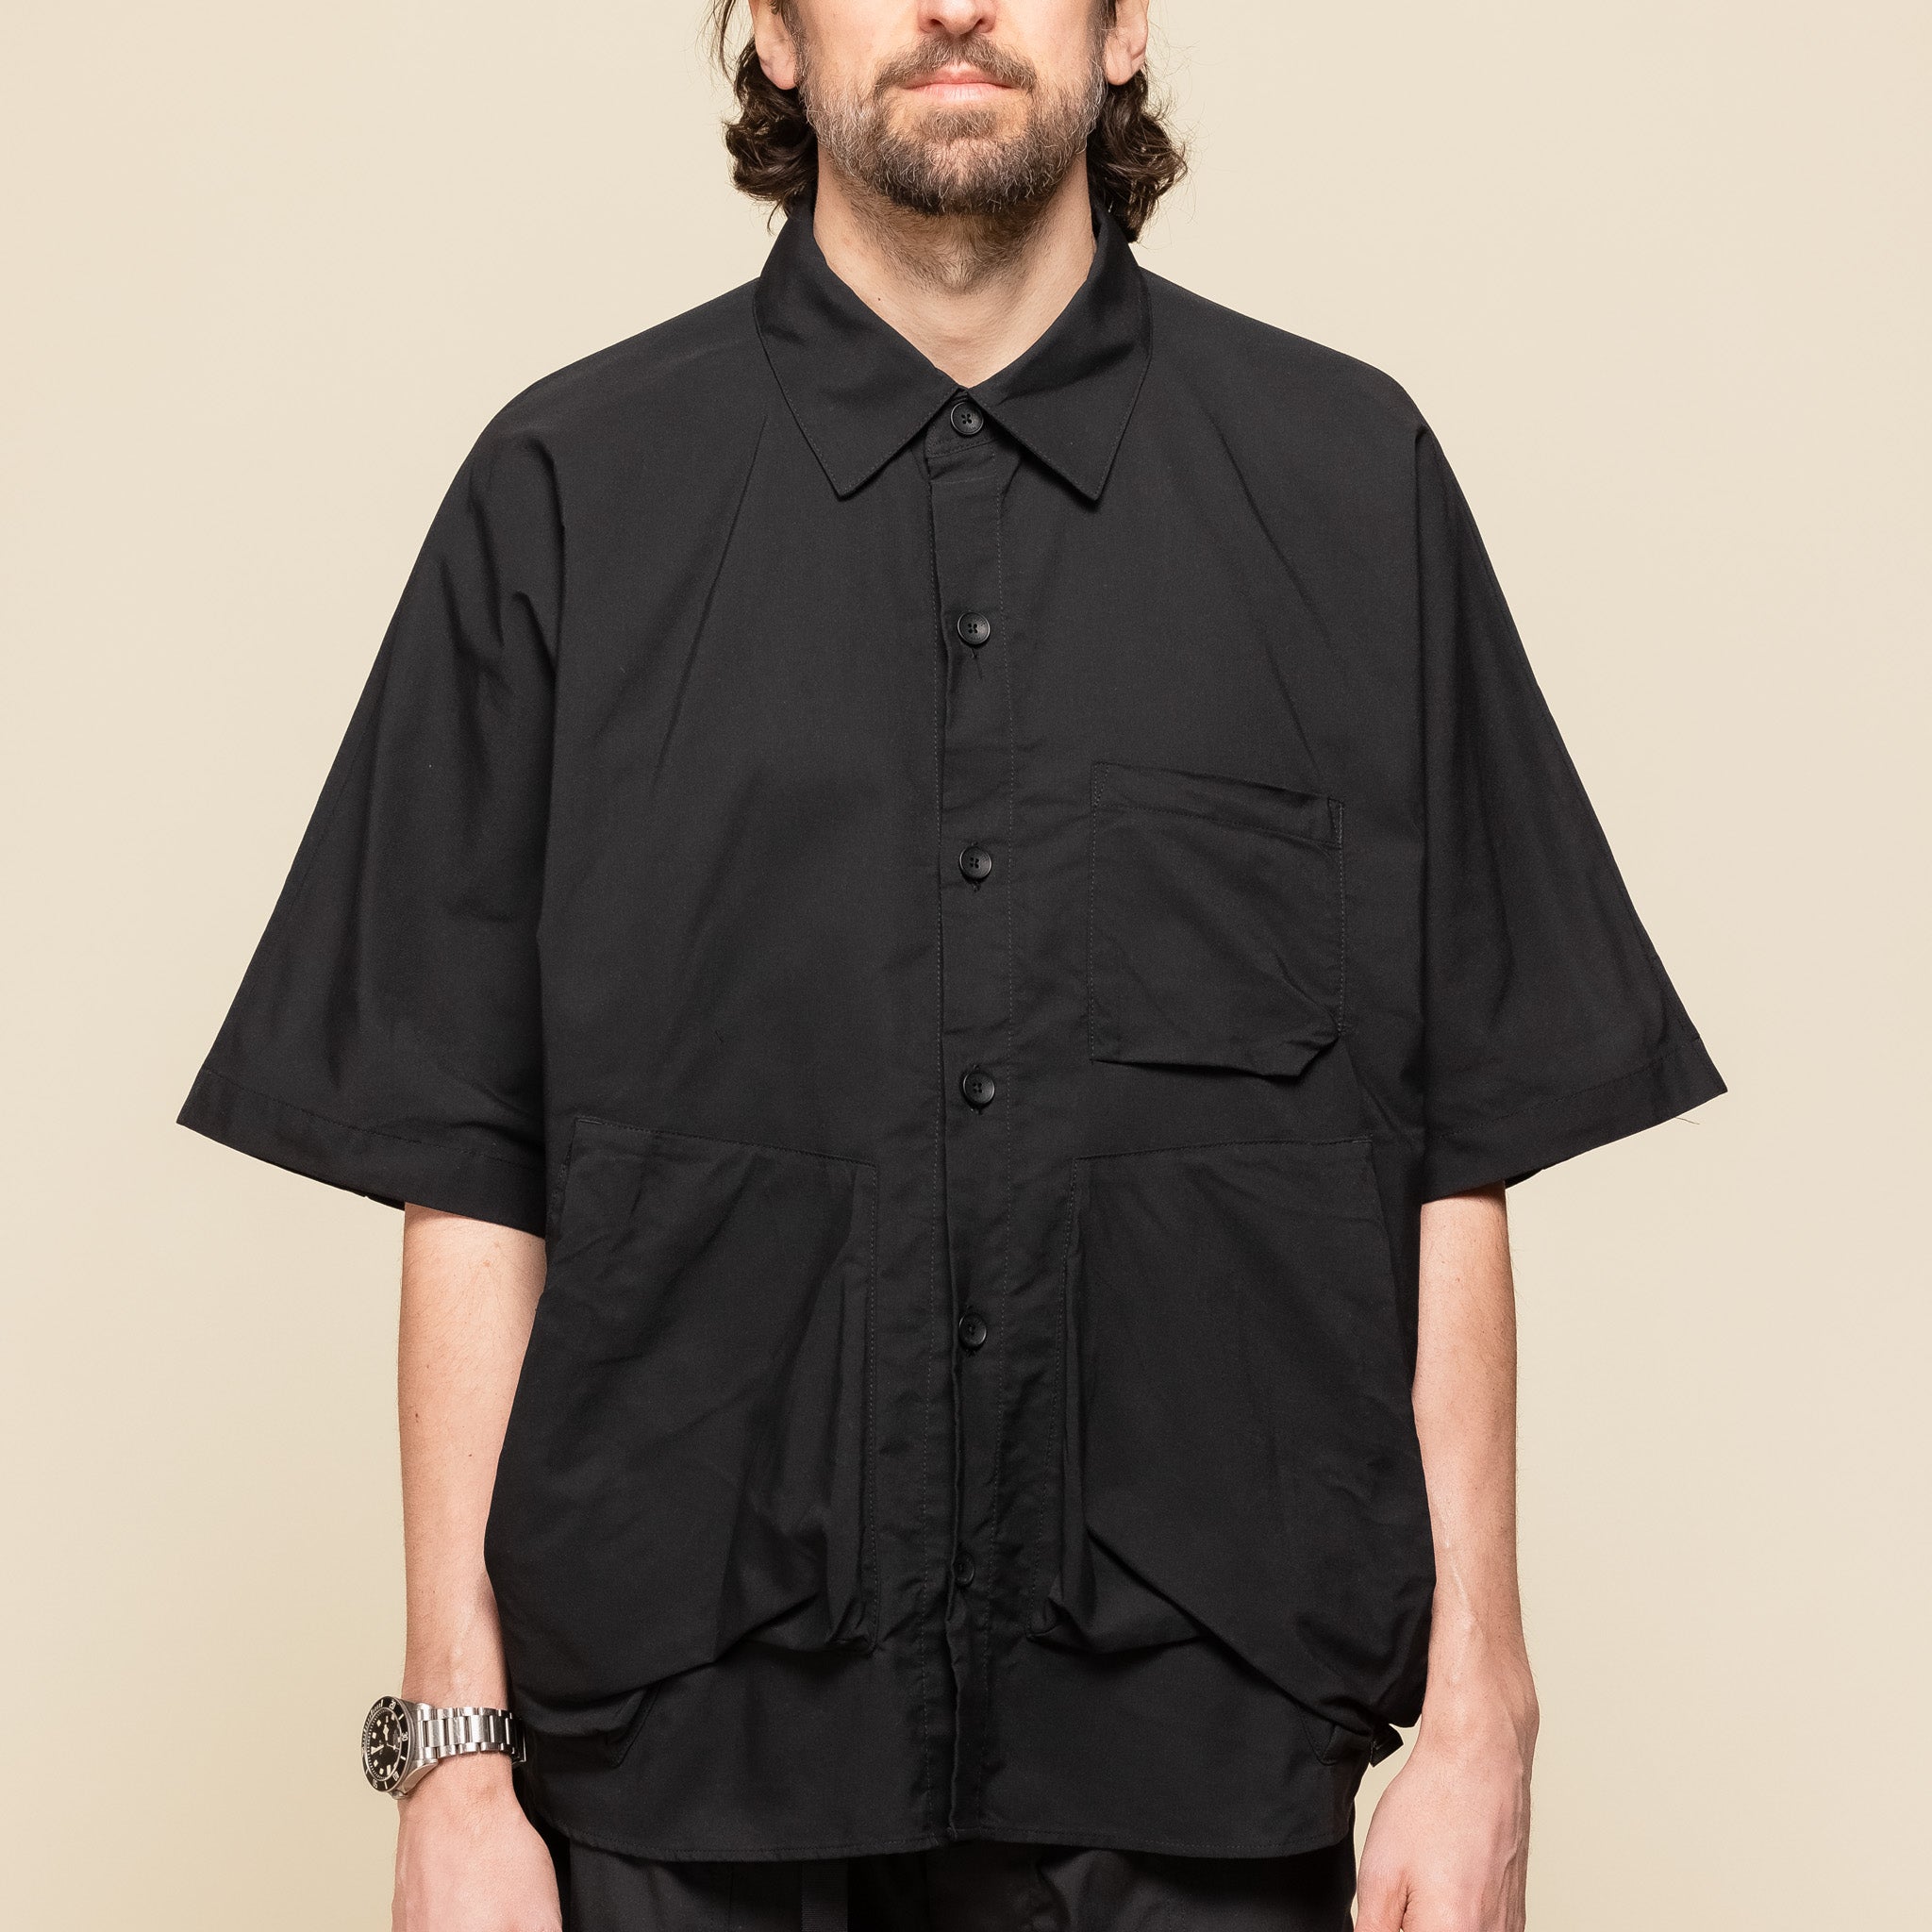 Poliquant - The Cordura Short Sleeve Shirt - Black "poliquant shirt" "poliquant stockist" "poliquant website"